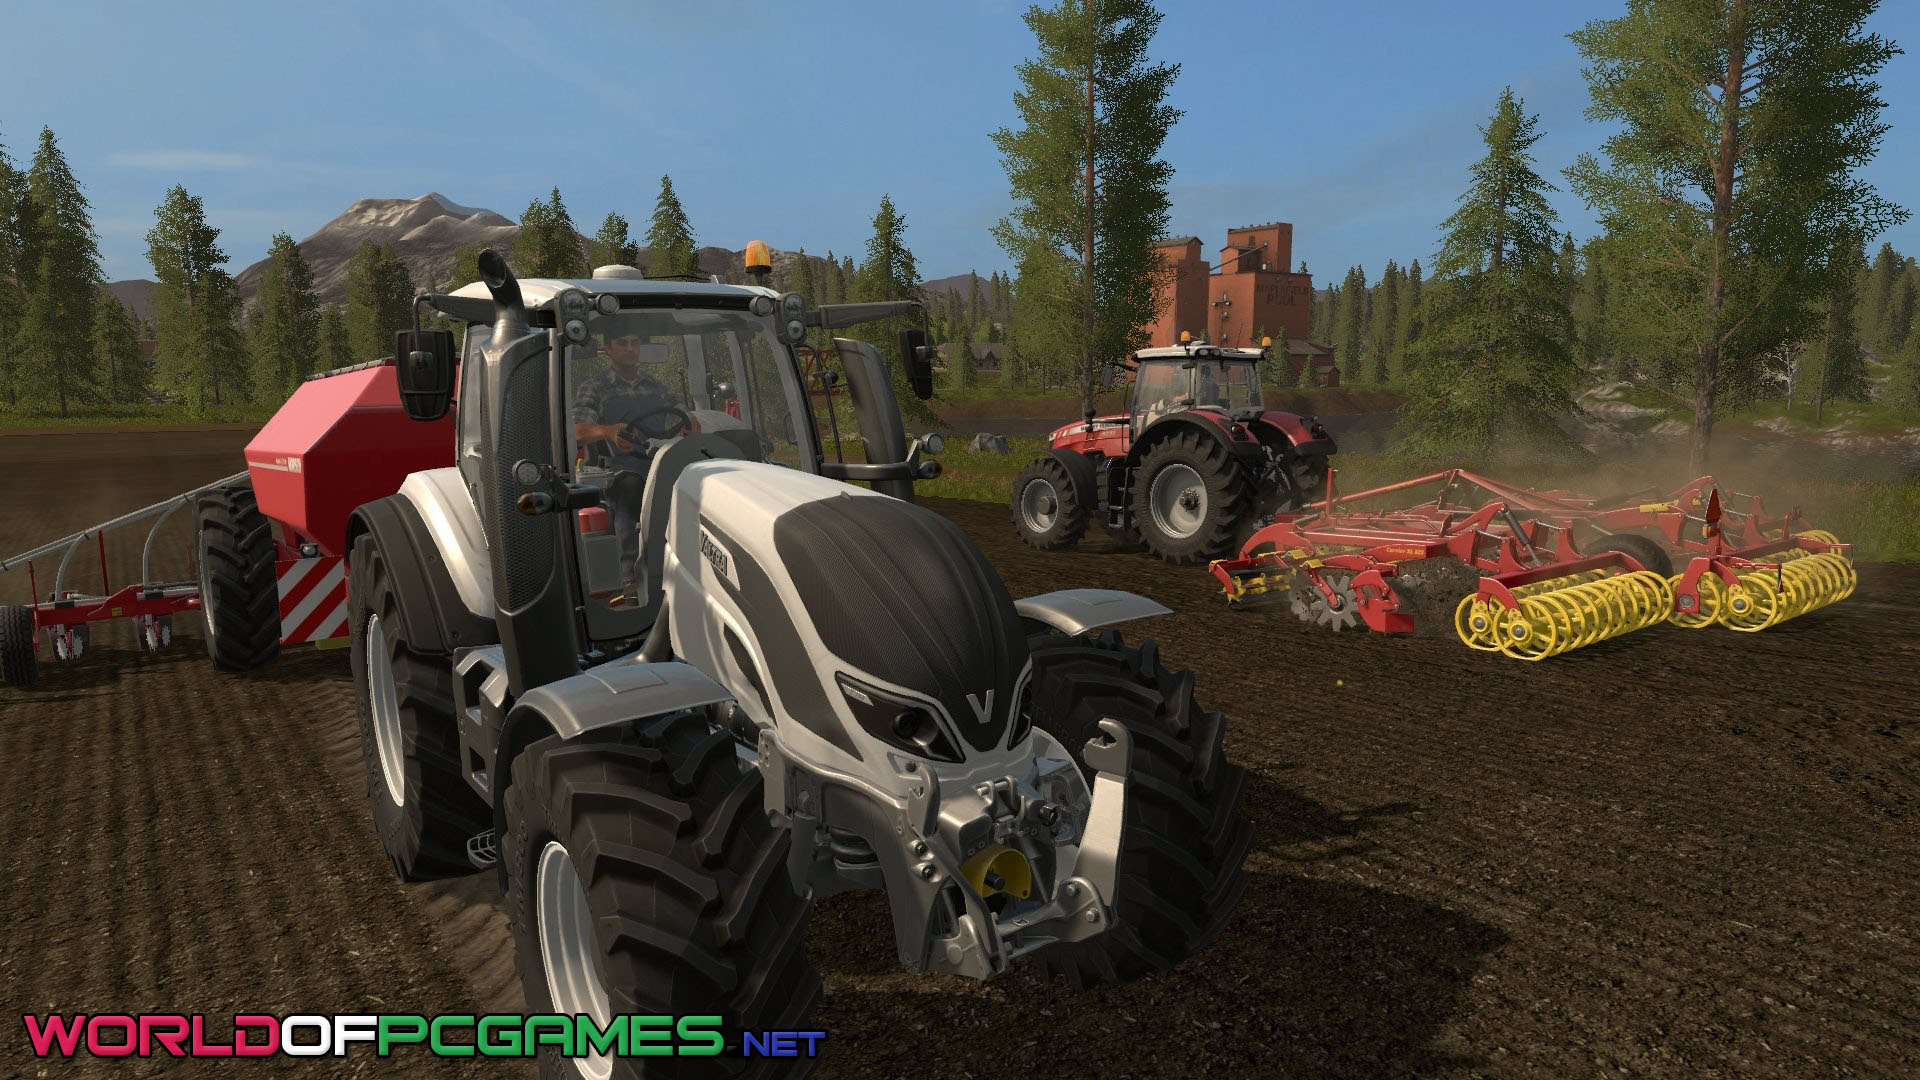 Farming Simulator 17 Free Download By worldof-pcgames.net